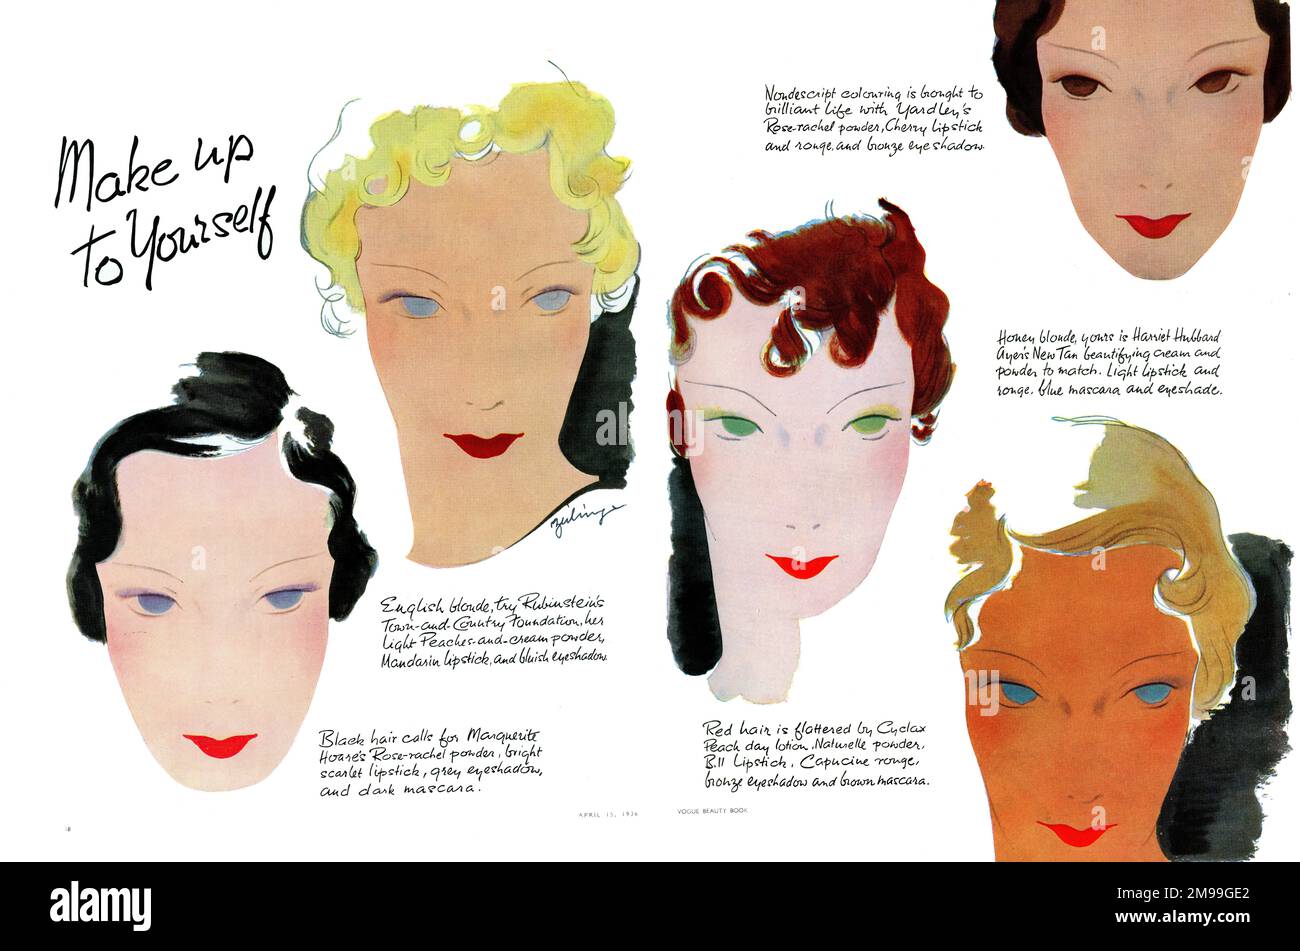 Print Ad 1940's Louis Philippe Angelus Lipstick Rouge Face Powder Cream